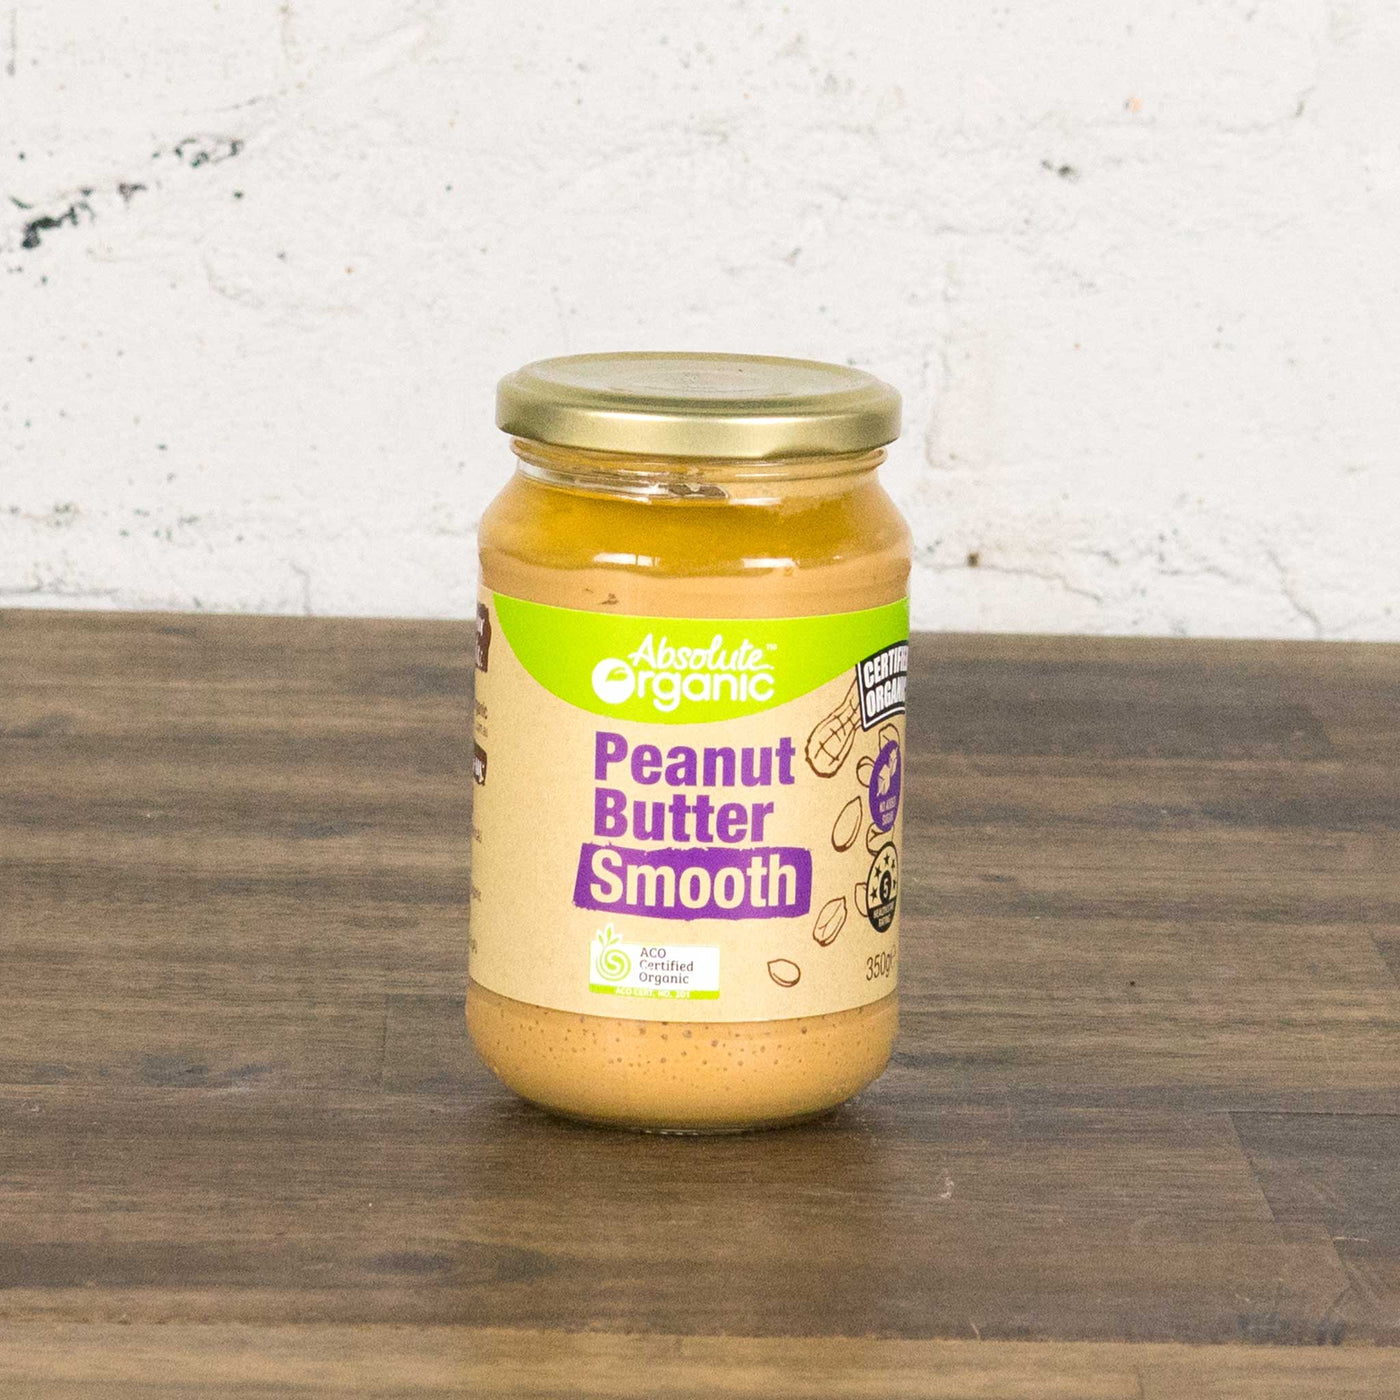 Absolute Organics Smooth Peanut Butter